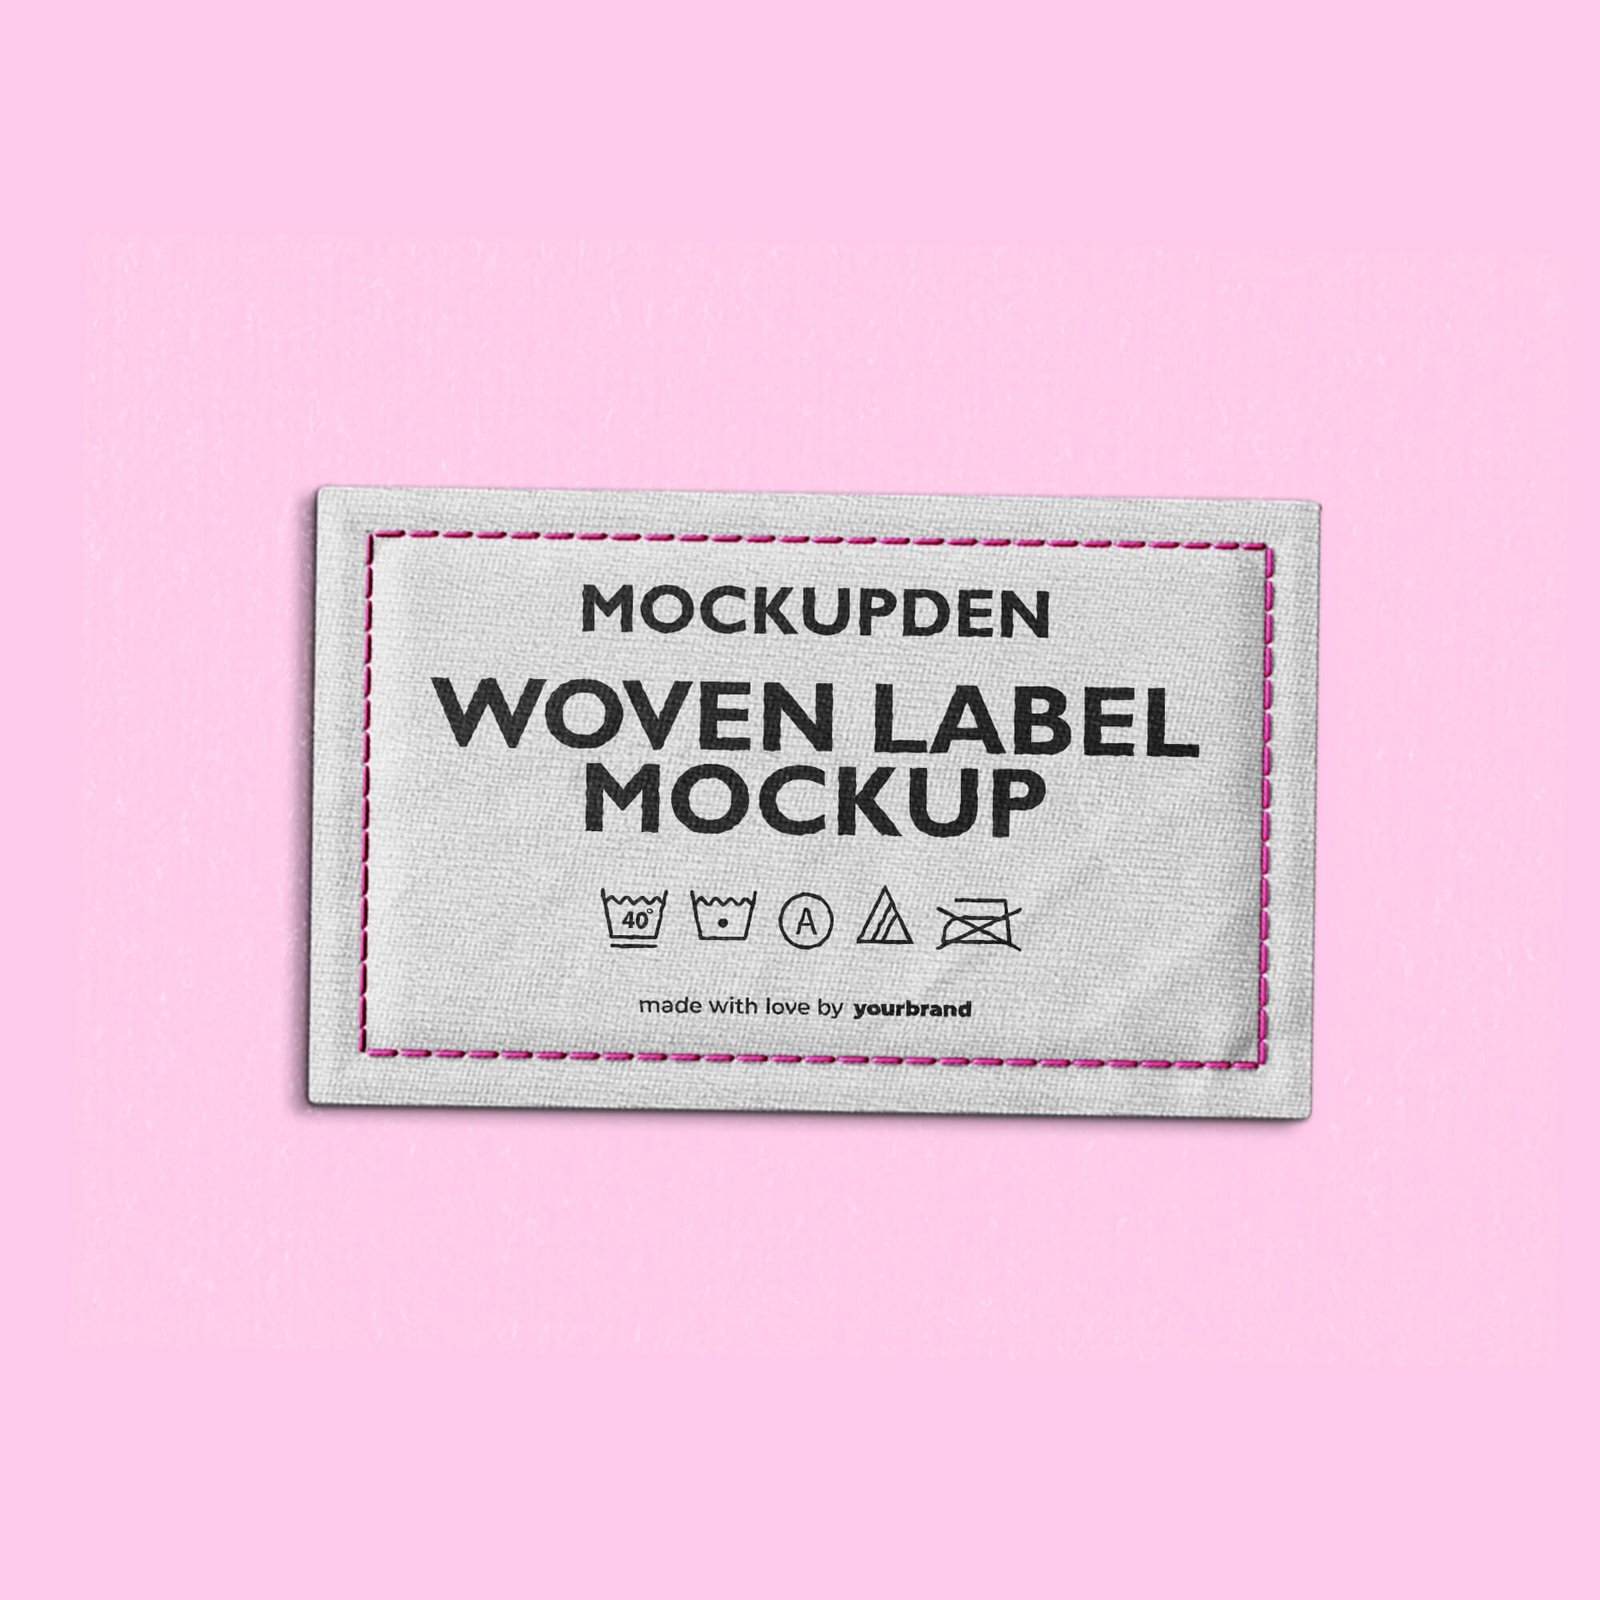 Design Free Woven Label Mockup PSD Template